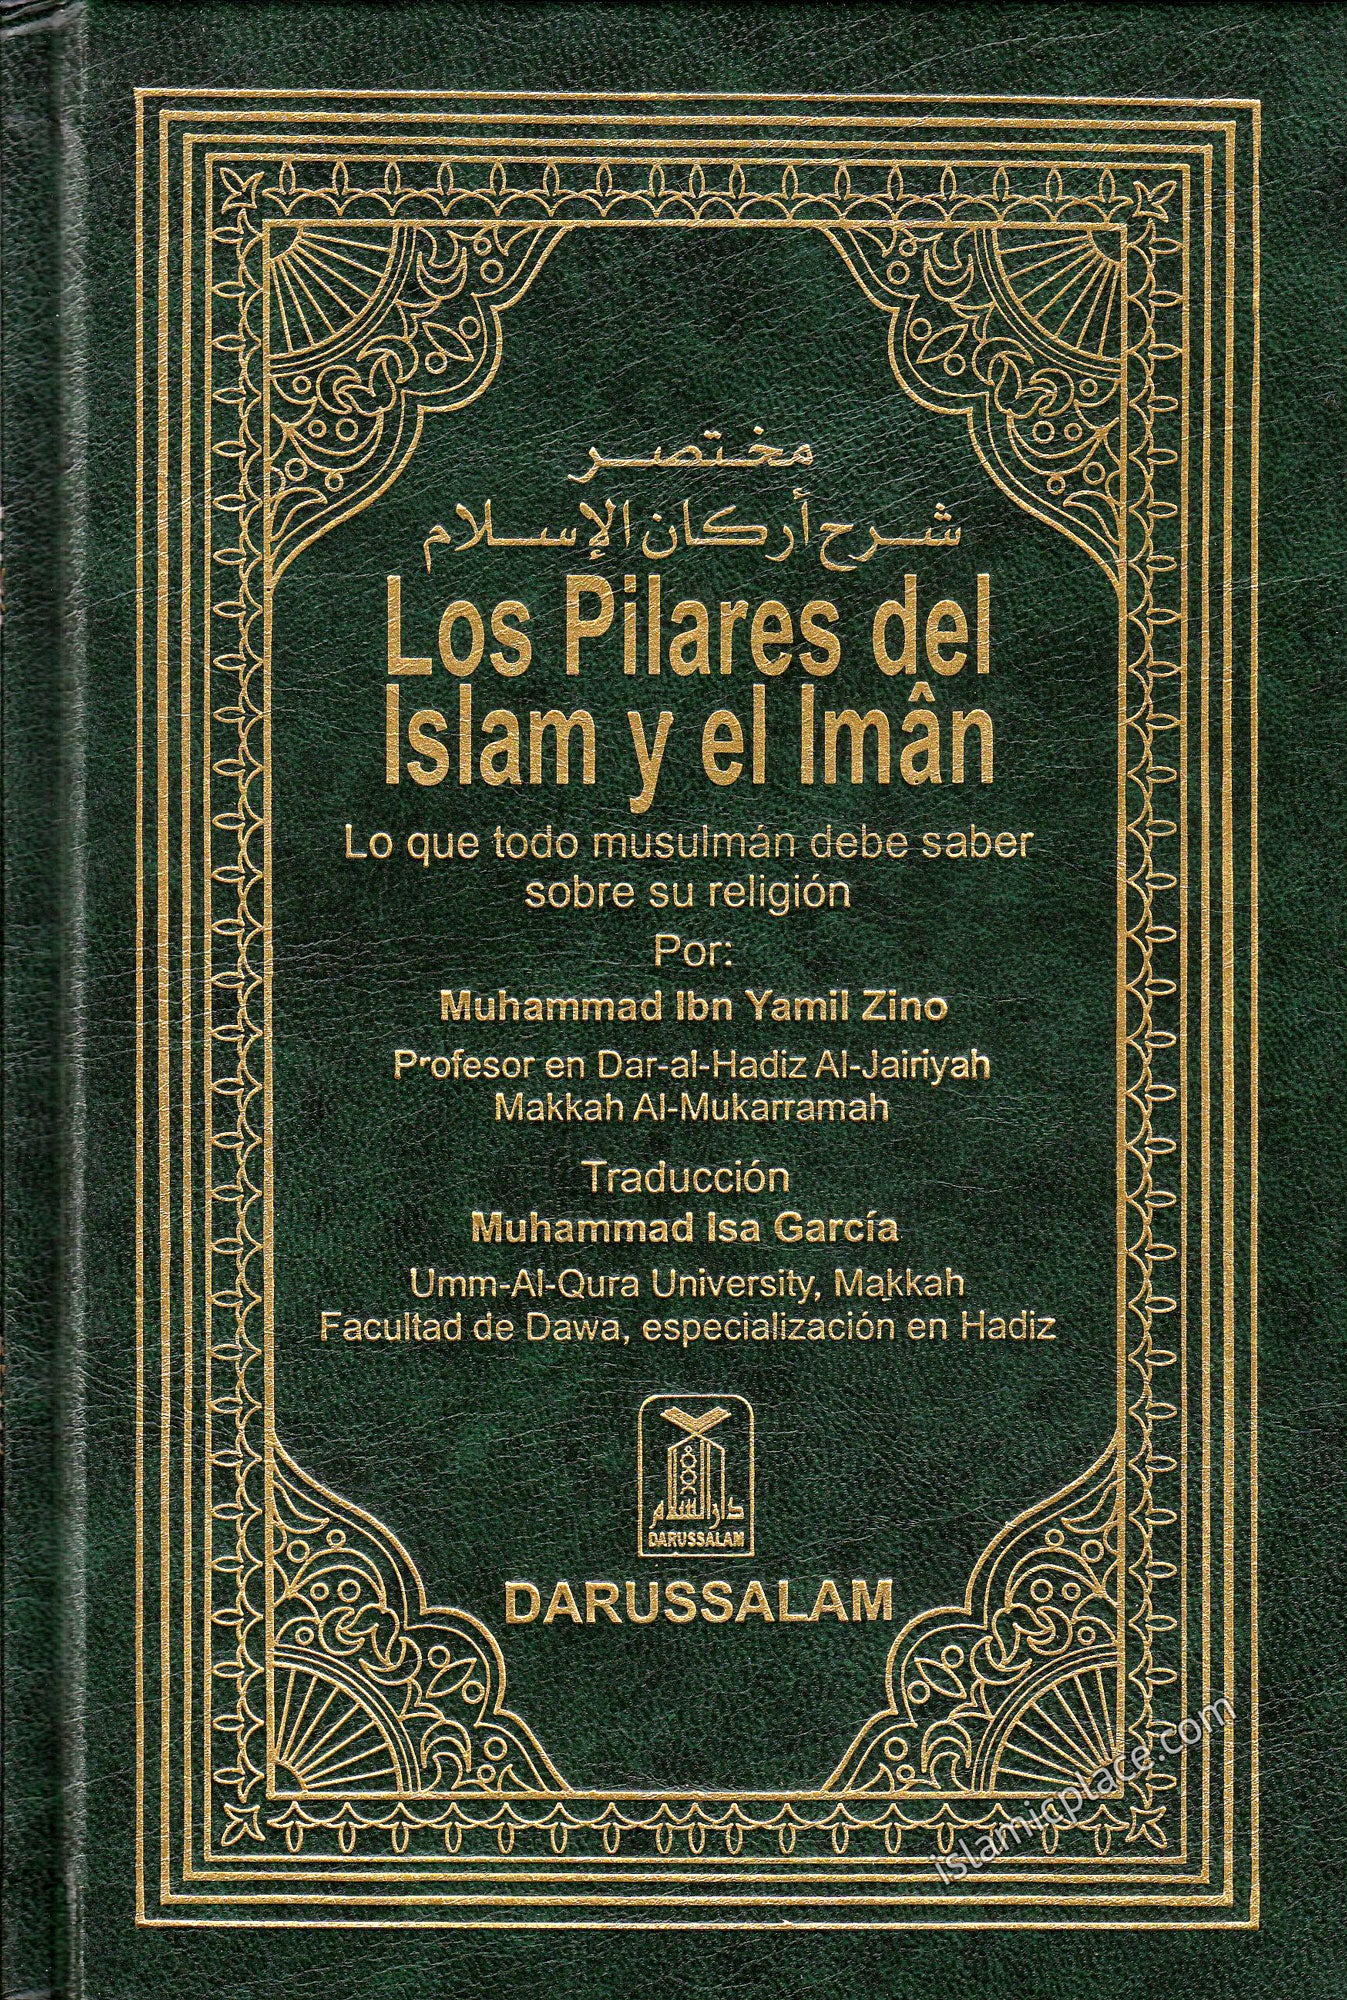 Spanish: Los Pilares del Islam y el Iman (The Pillars of Islam and Iman)